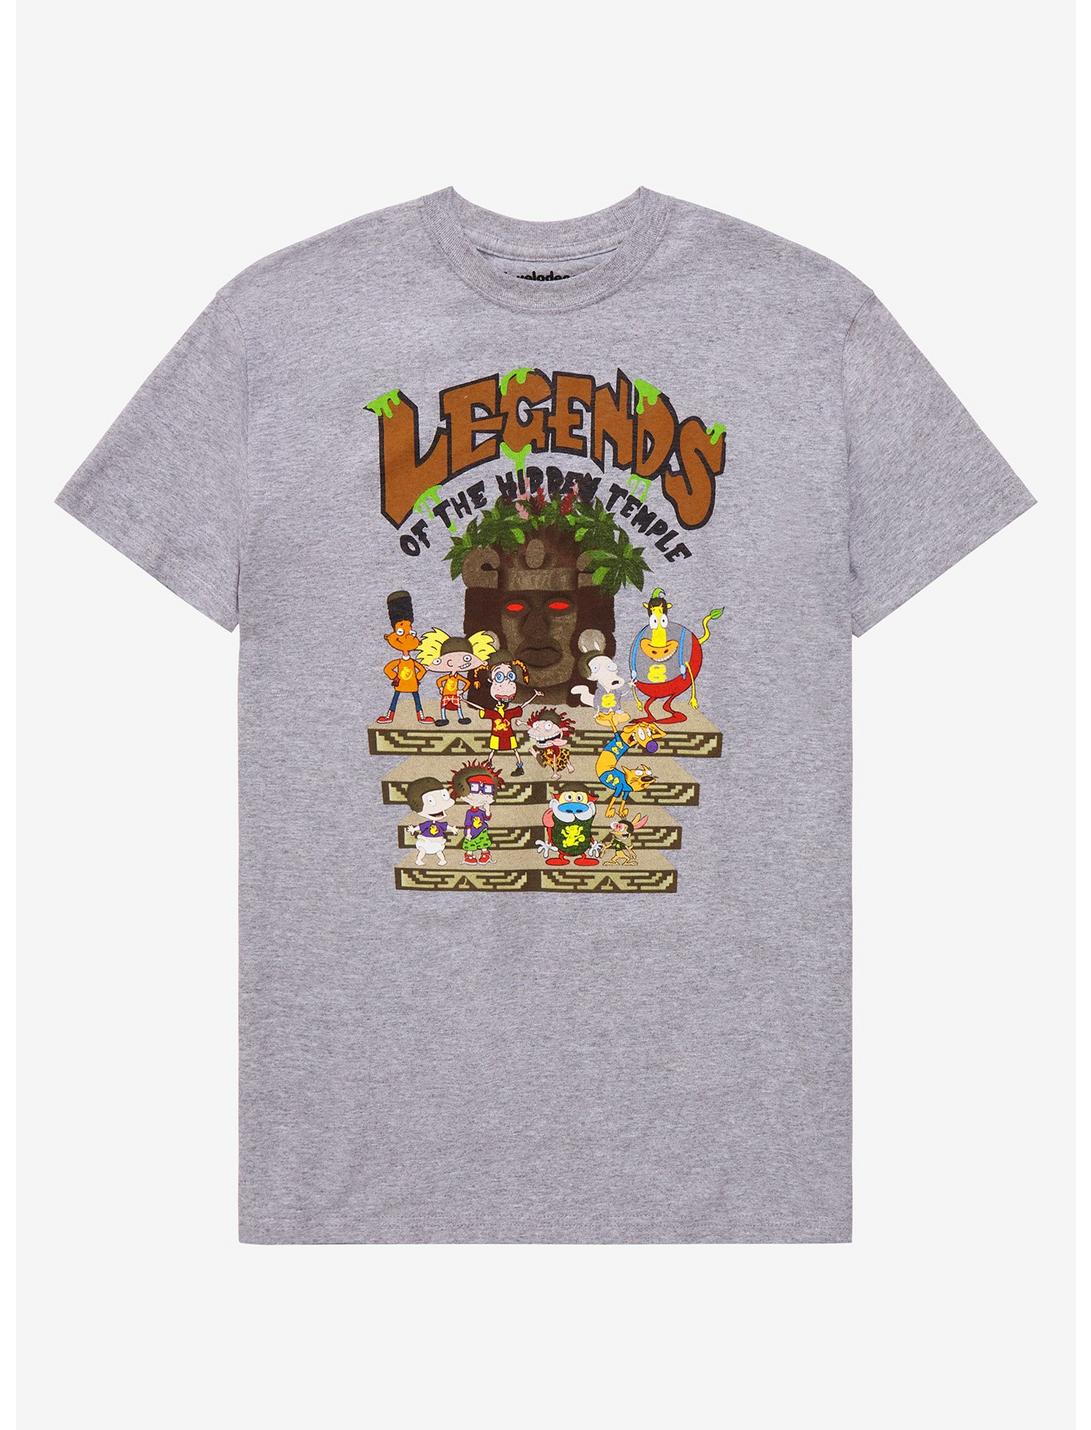 Nickelodeon Legends of the Hidden Temple T-Shirt - BoxLunch Exclusive, GREY, hi-res